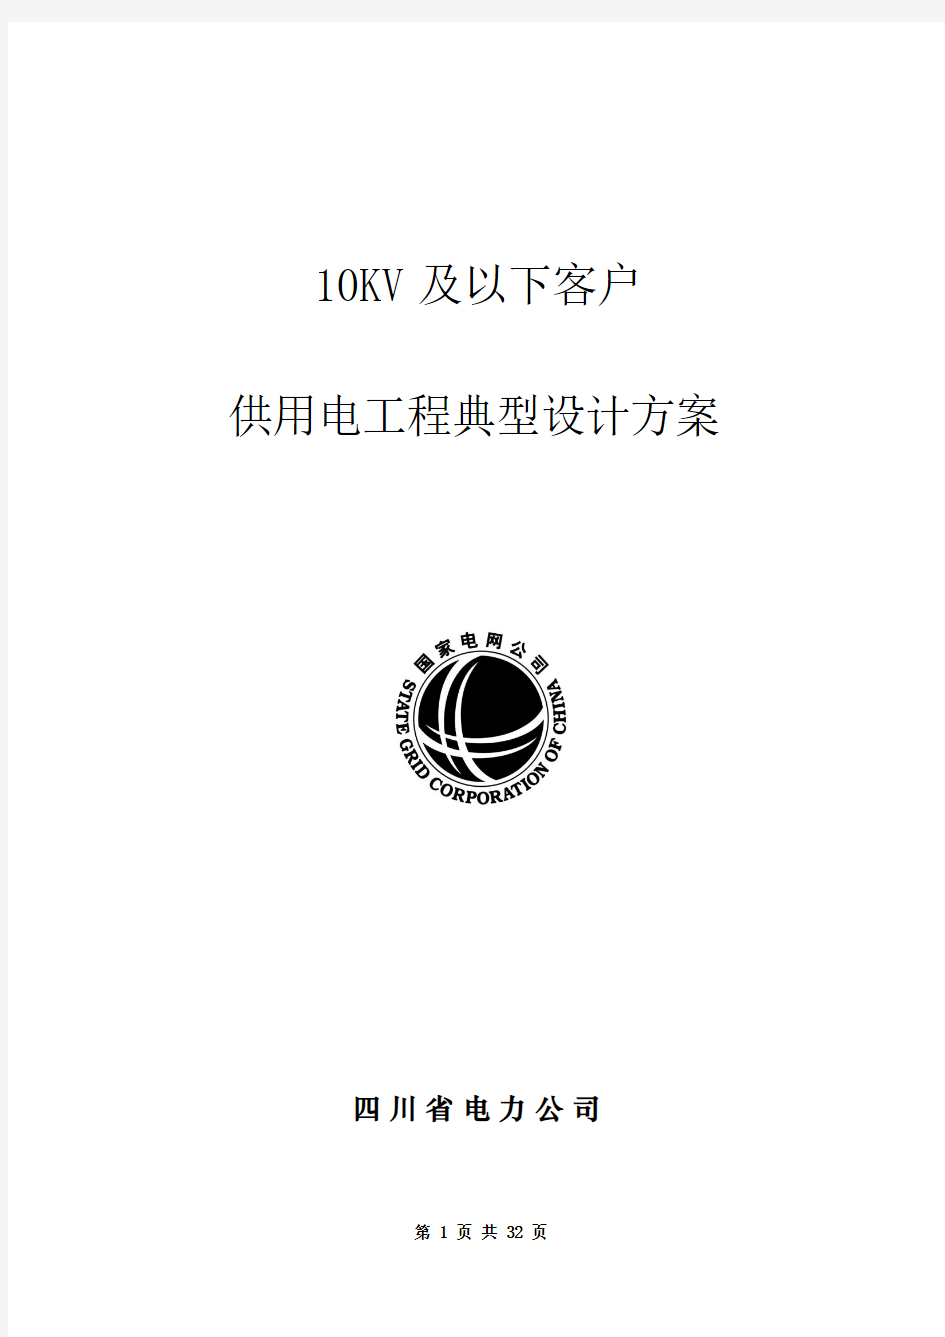 10kV及以下客户供用工程典型设计方案(四川省电力公司 2006年6月)